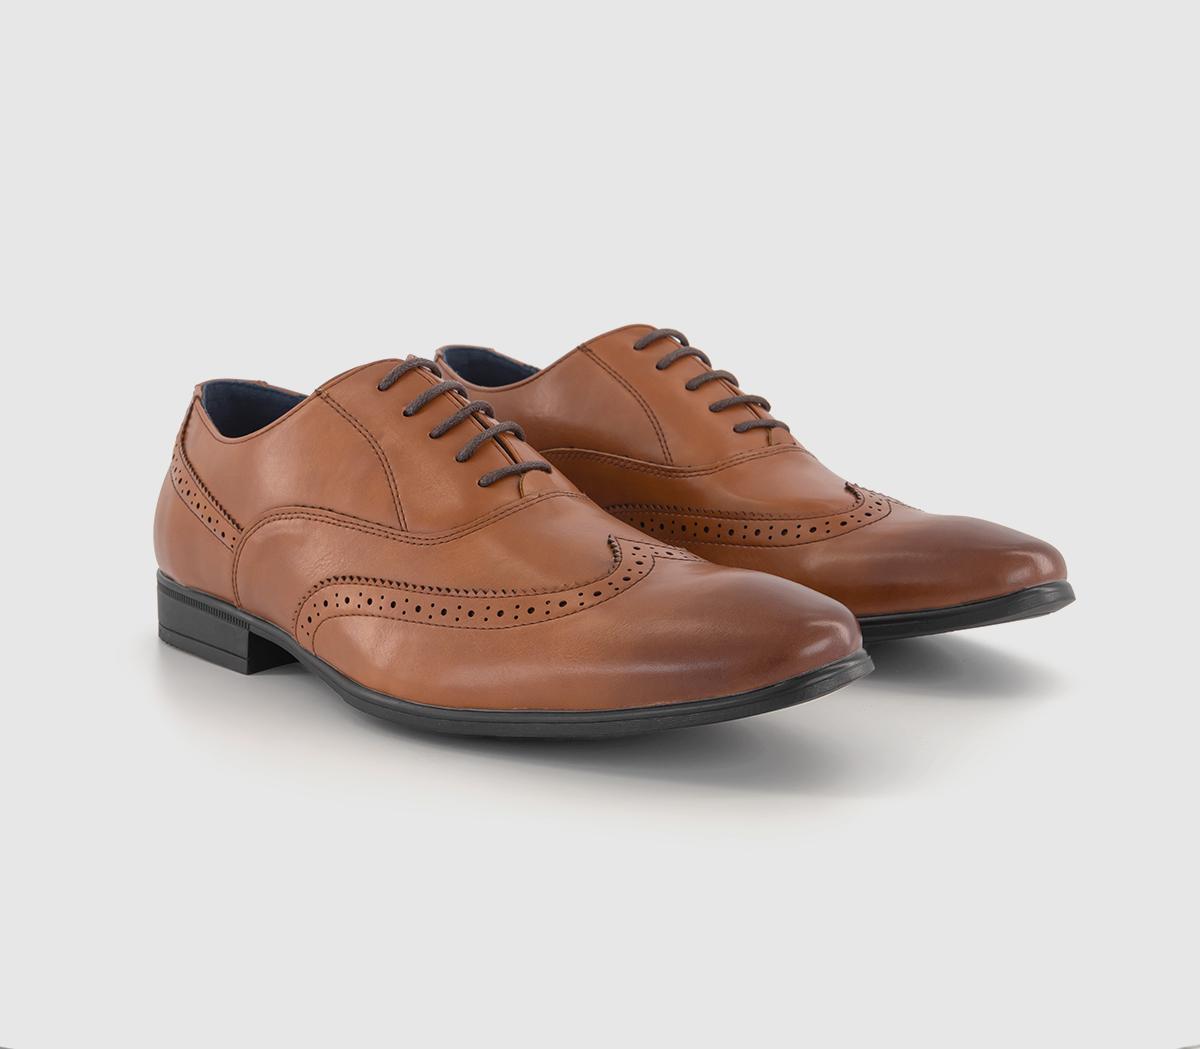 OFFICE Mens Martel Wingtip Oxford Shoes Tan, 12